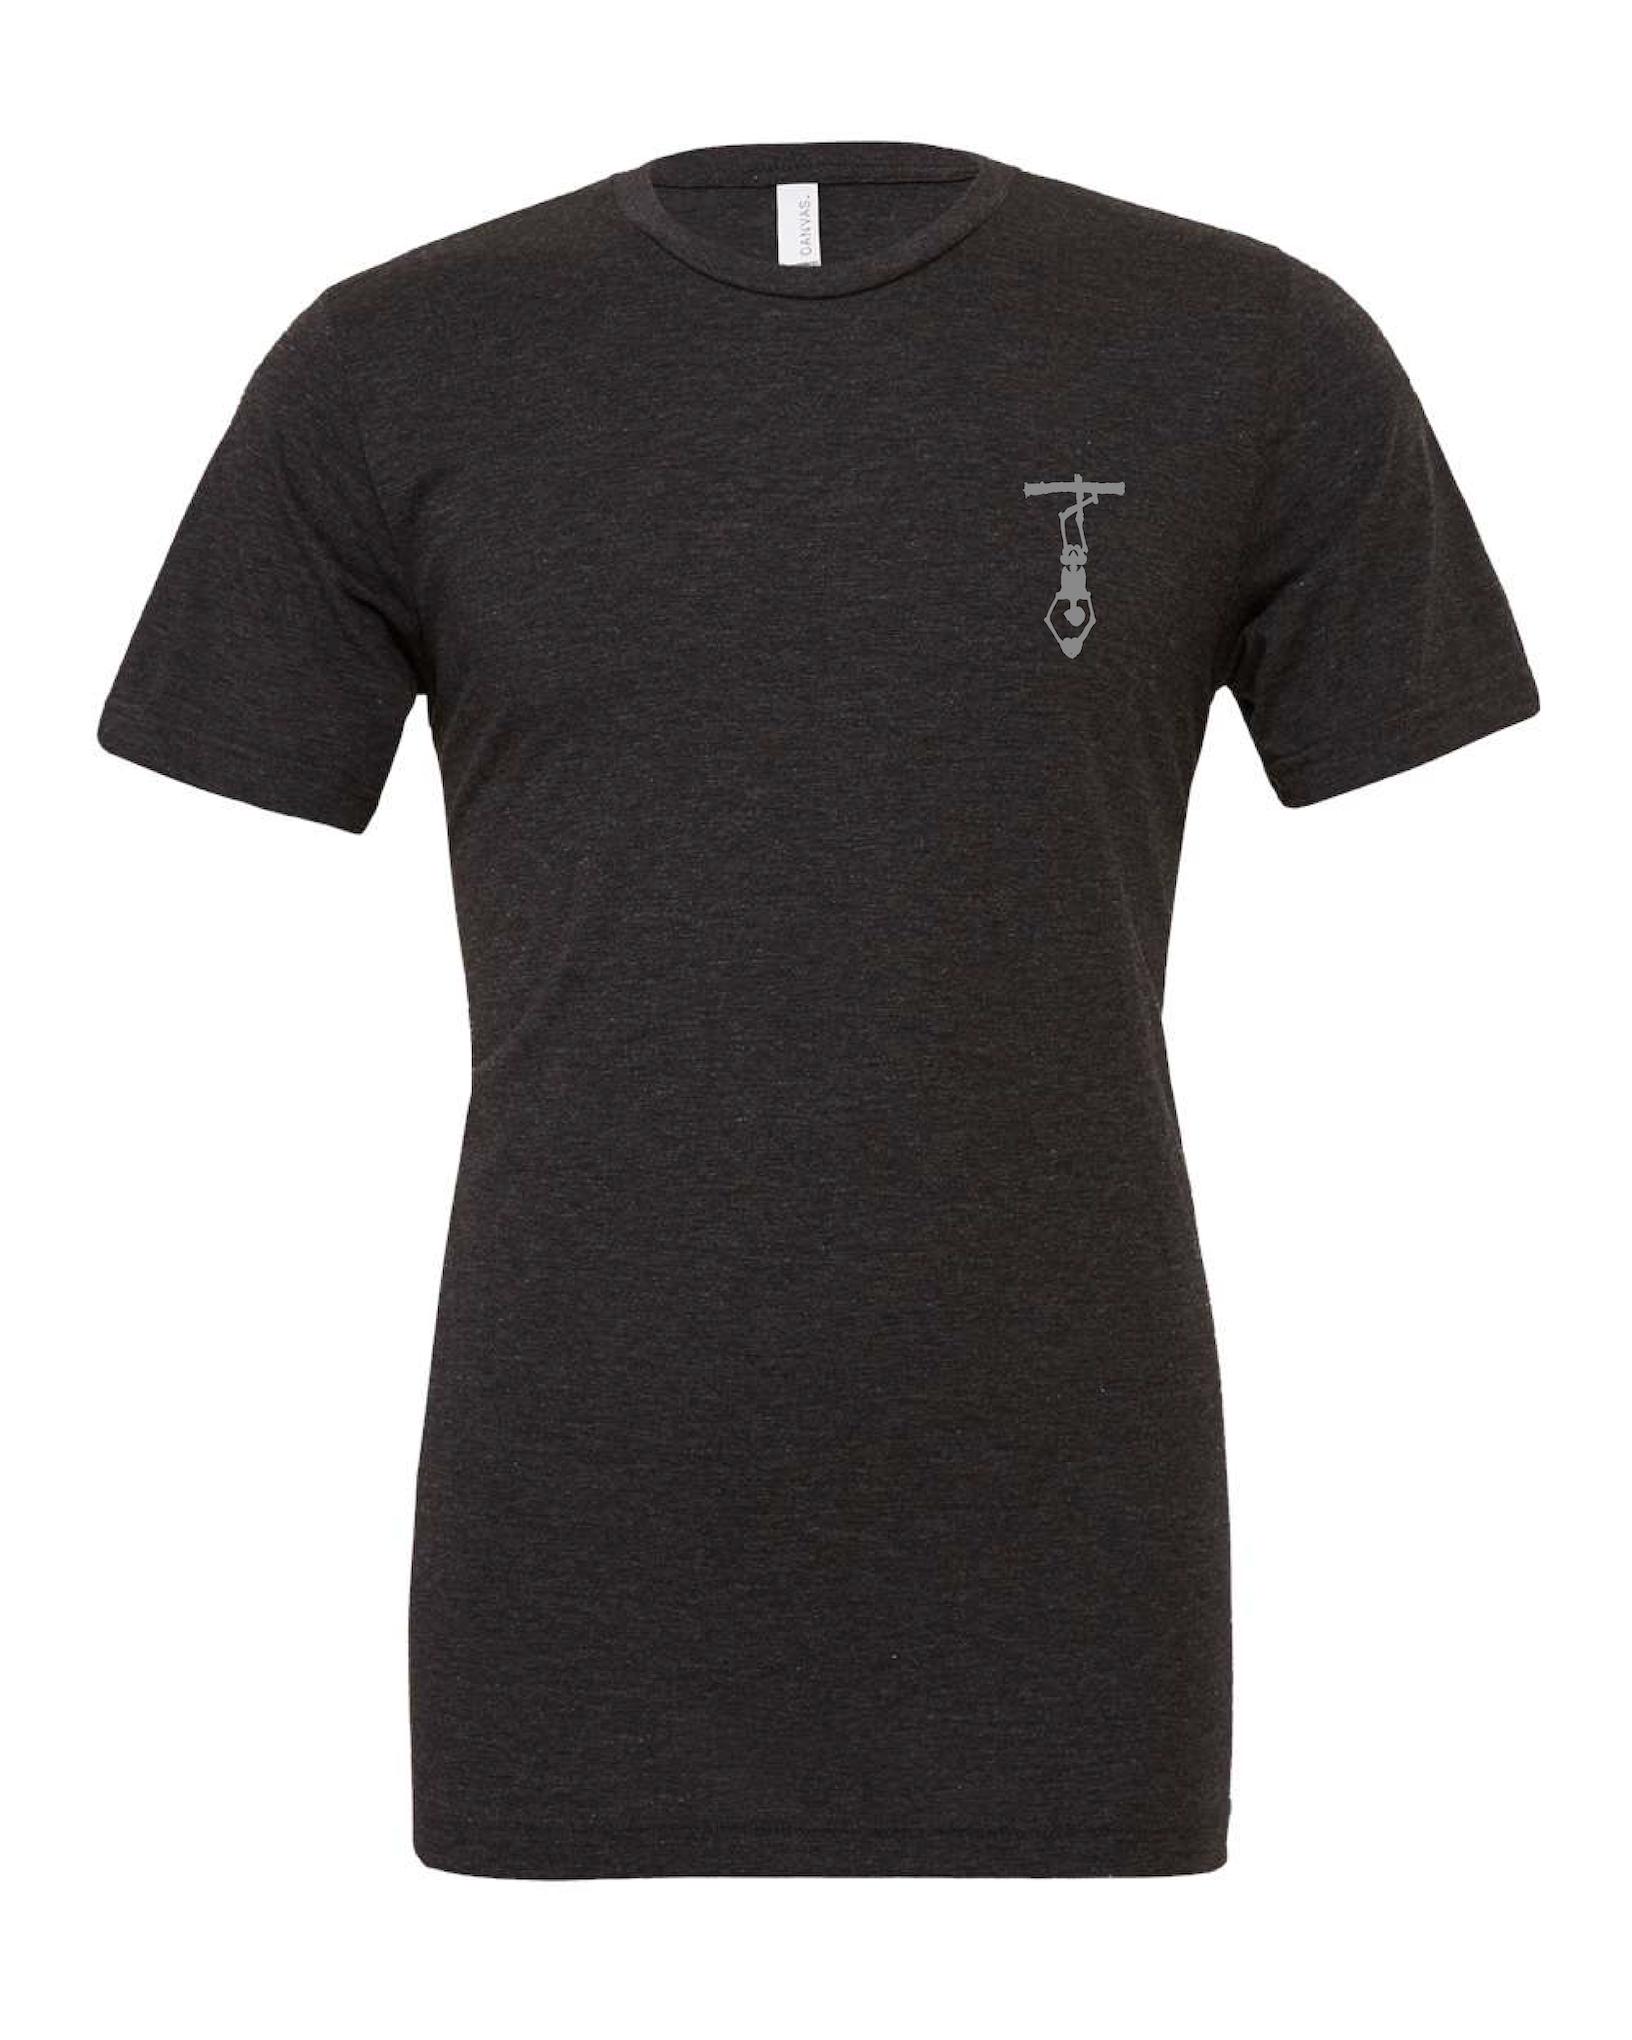 SEG Blocks T-Shirt - Grey Print